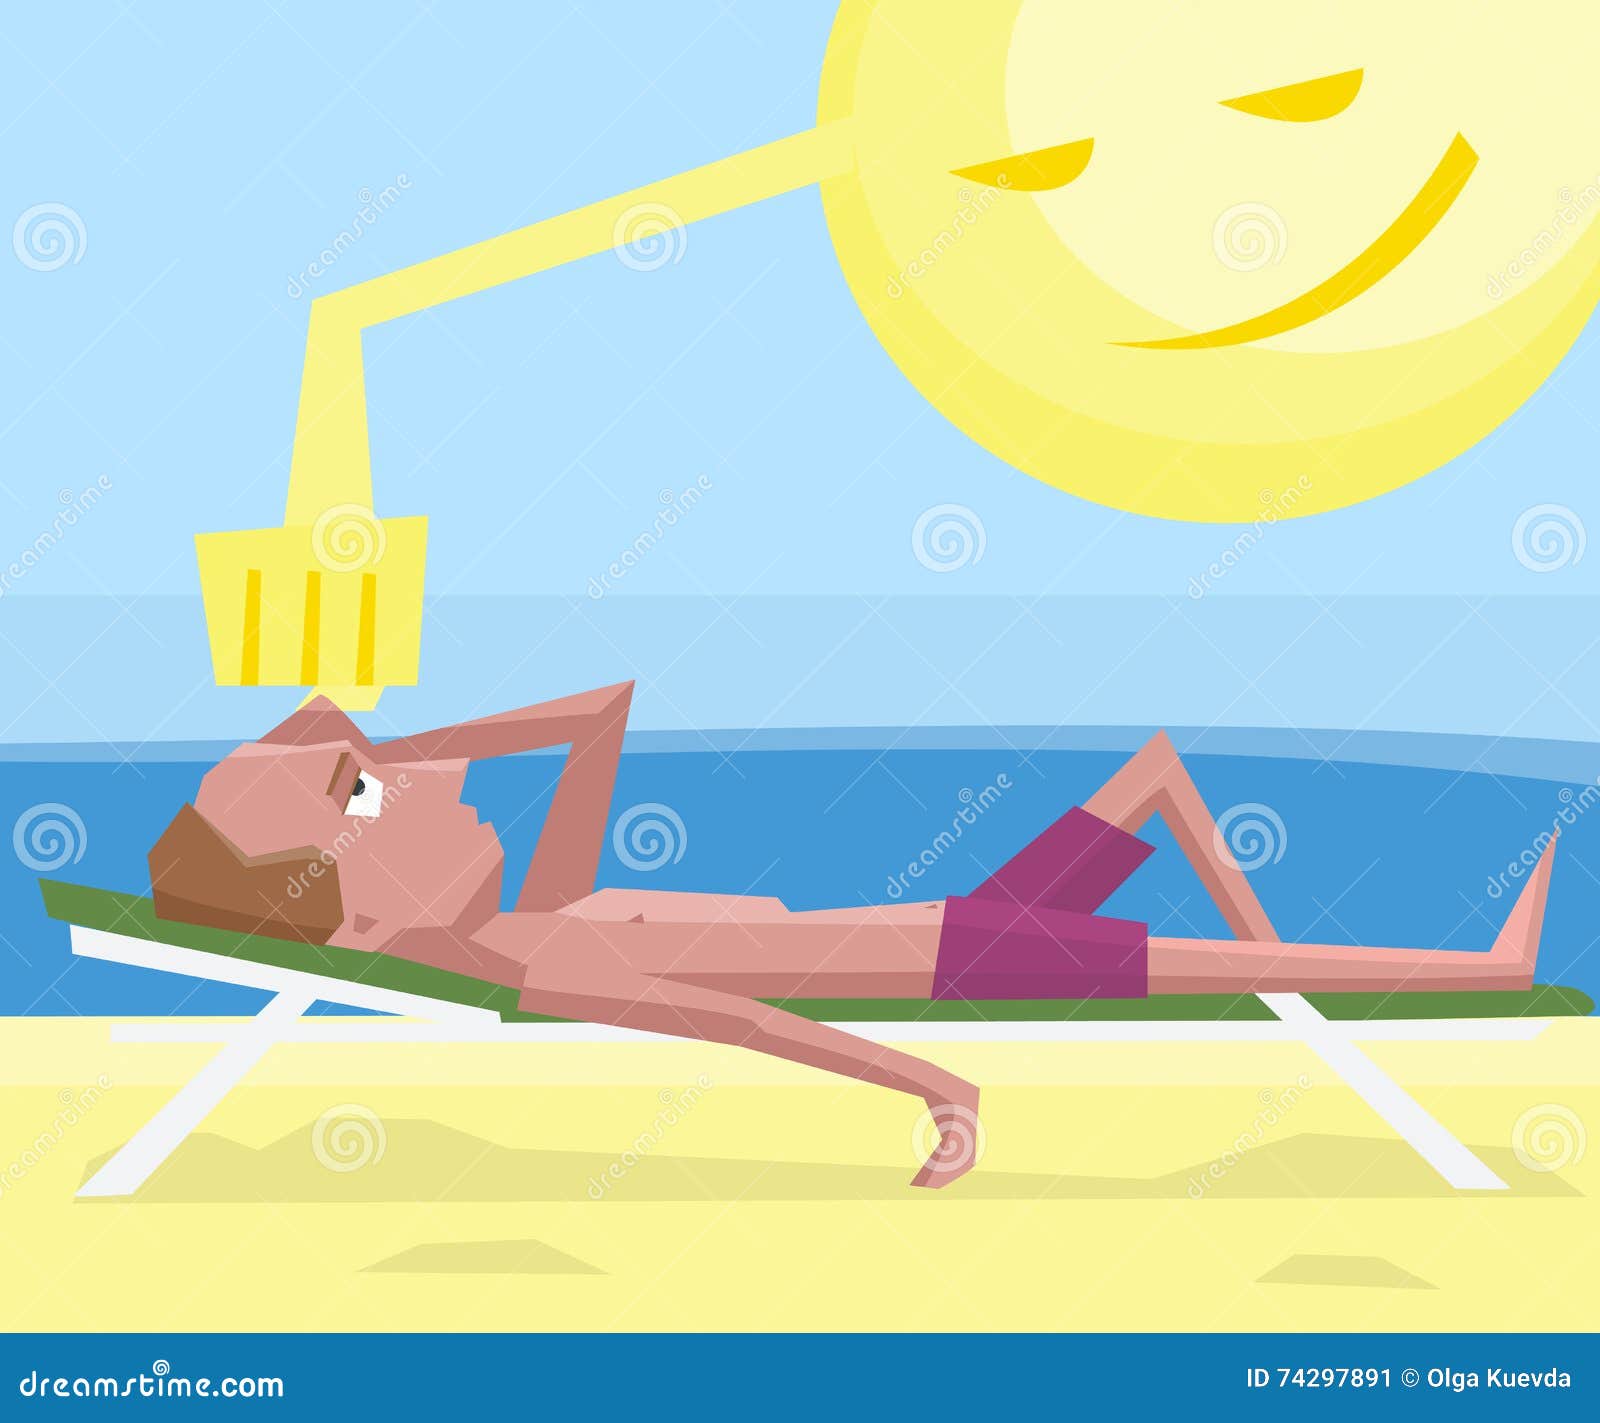 man getting sunstroke at beach